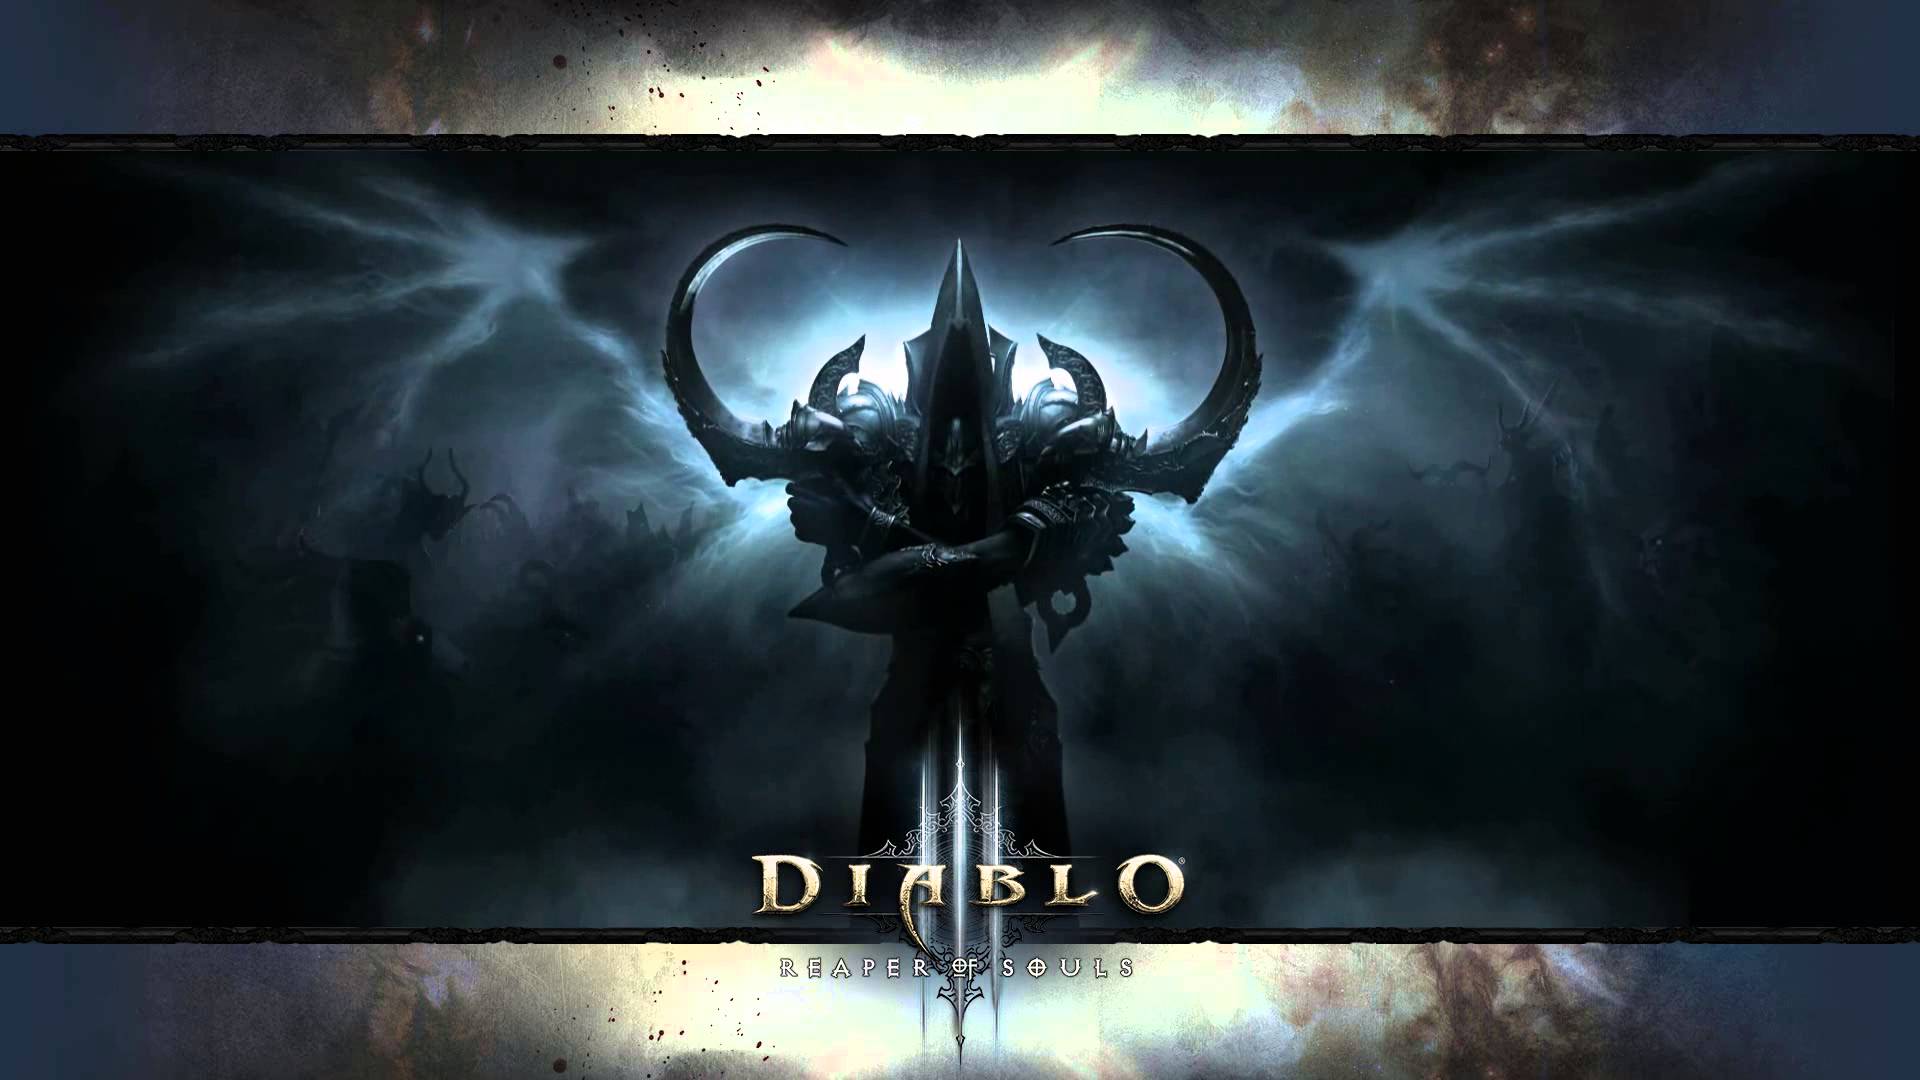 Diablo 3: Reaper of Souls - Malthael (DreamScene)